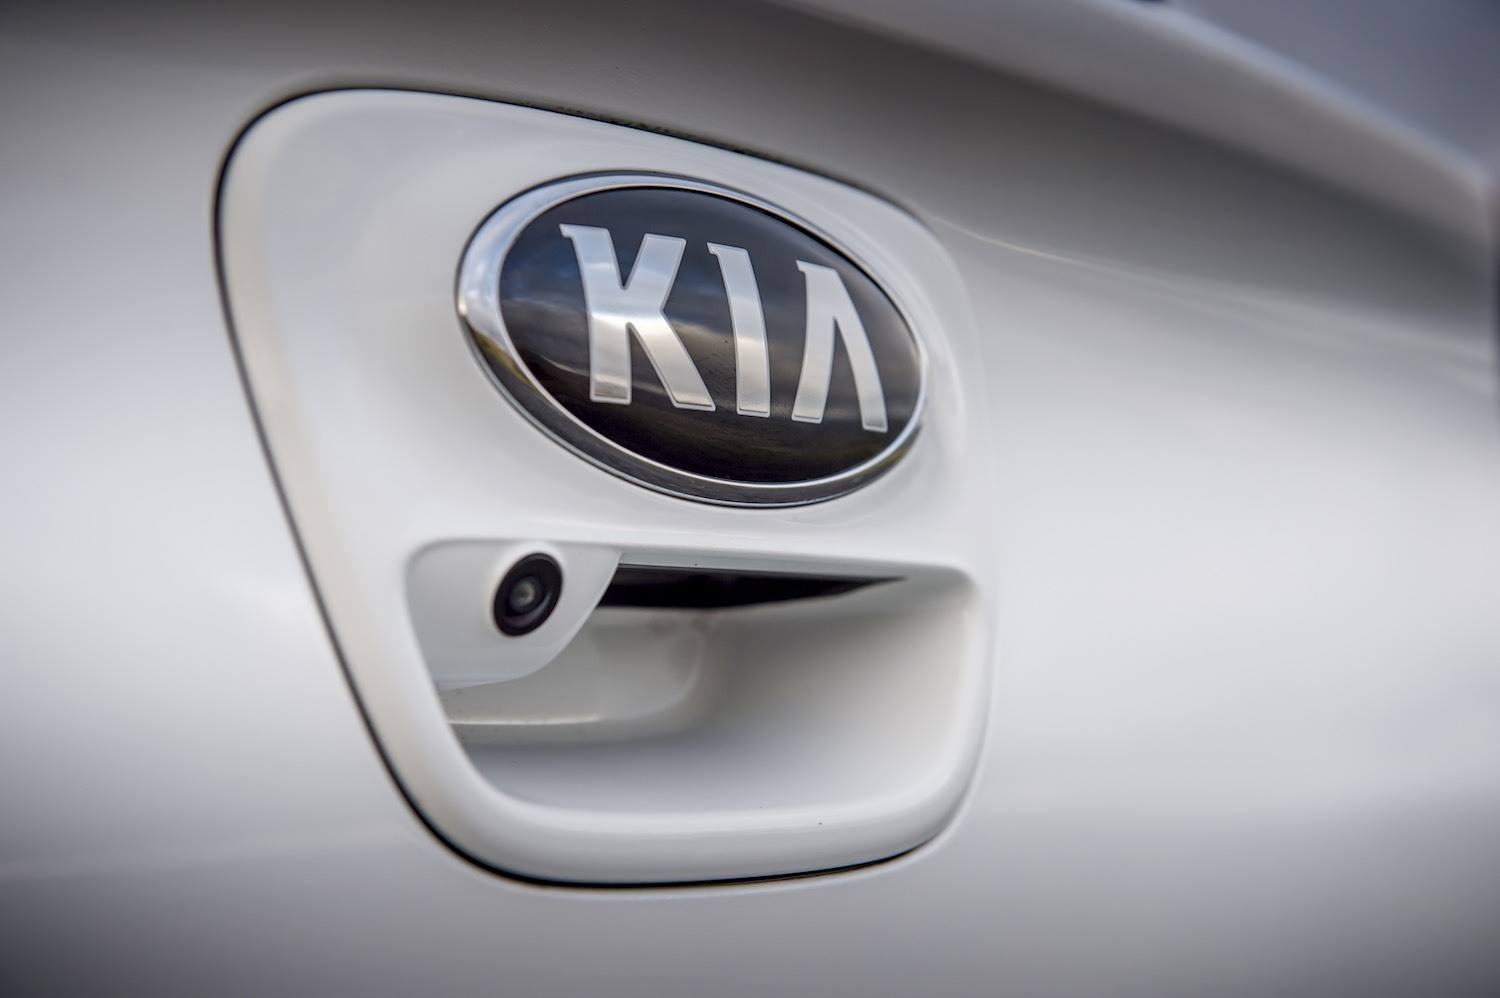 Neil Lyndon reviews the Kia Rio 1.4 CRDi 3 Eco for Drive 16